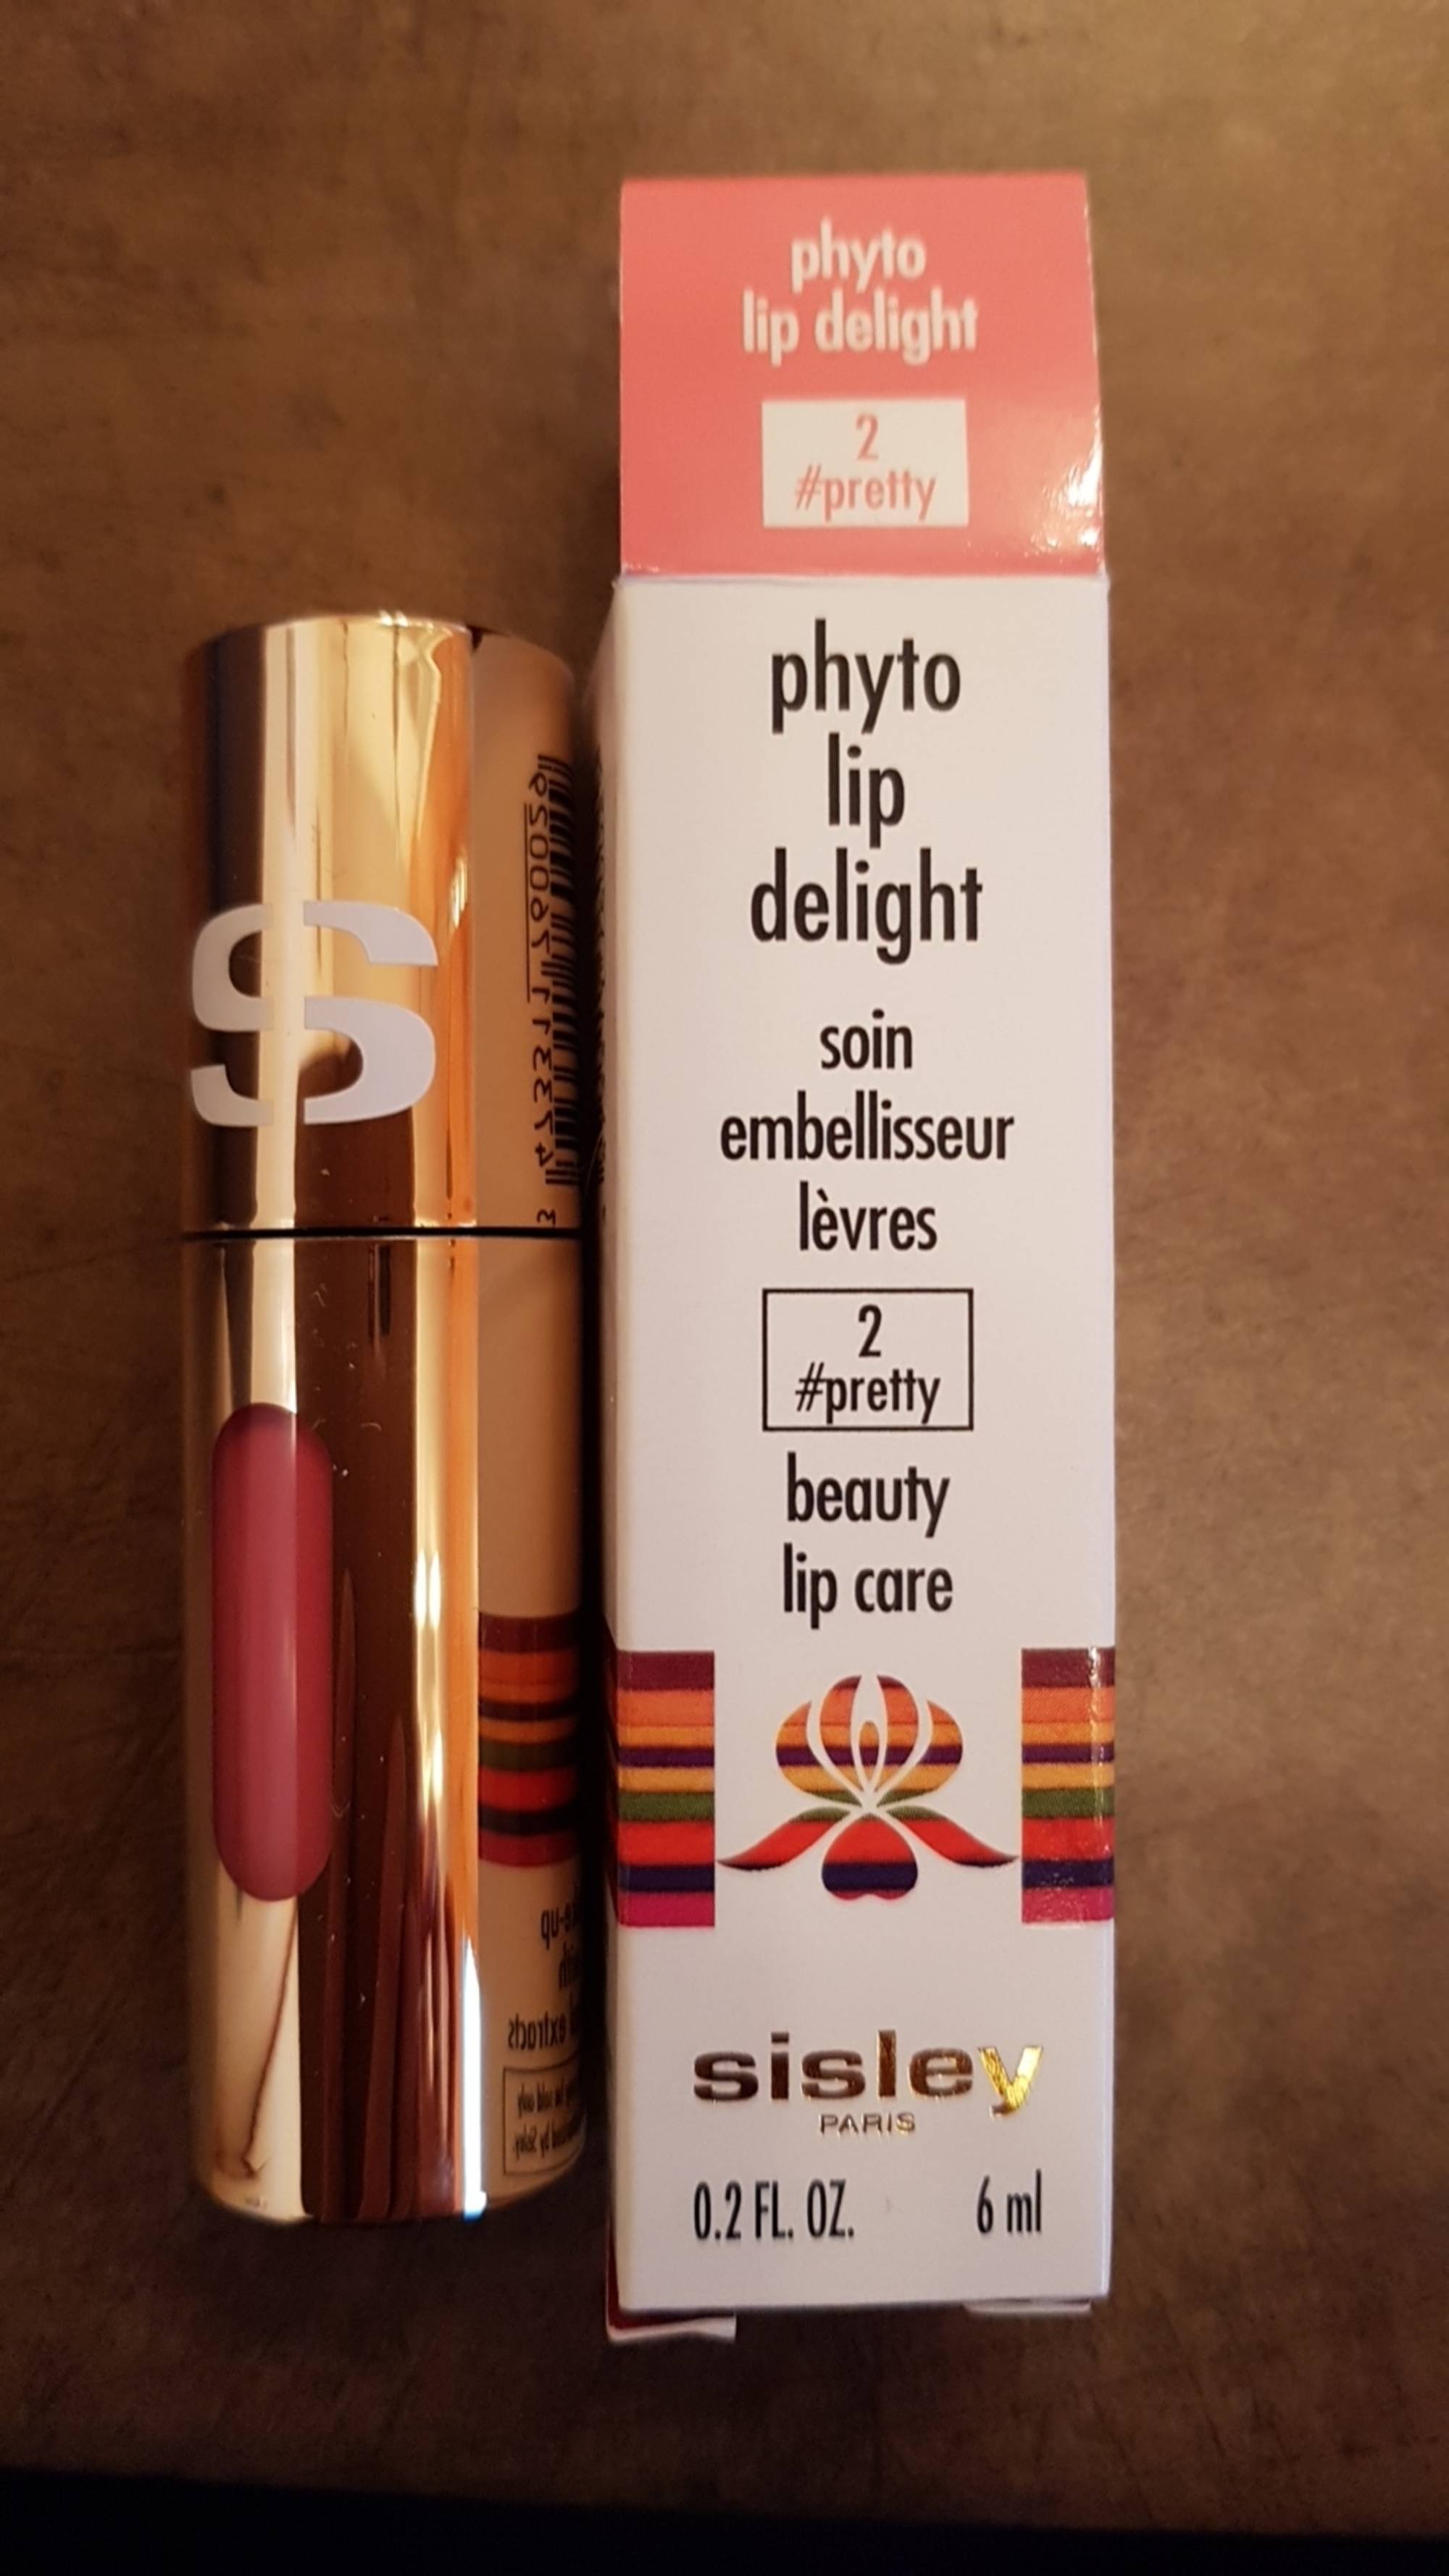 SISLEY - Phyto lip delight - Soin embellisseur lèvres